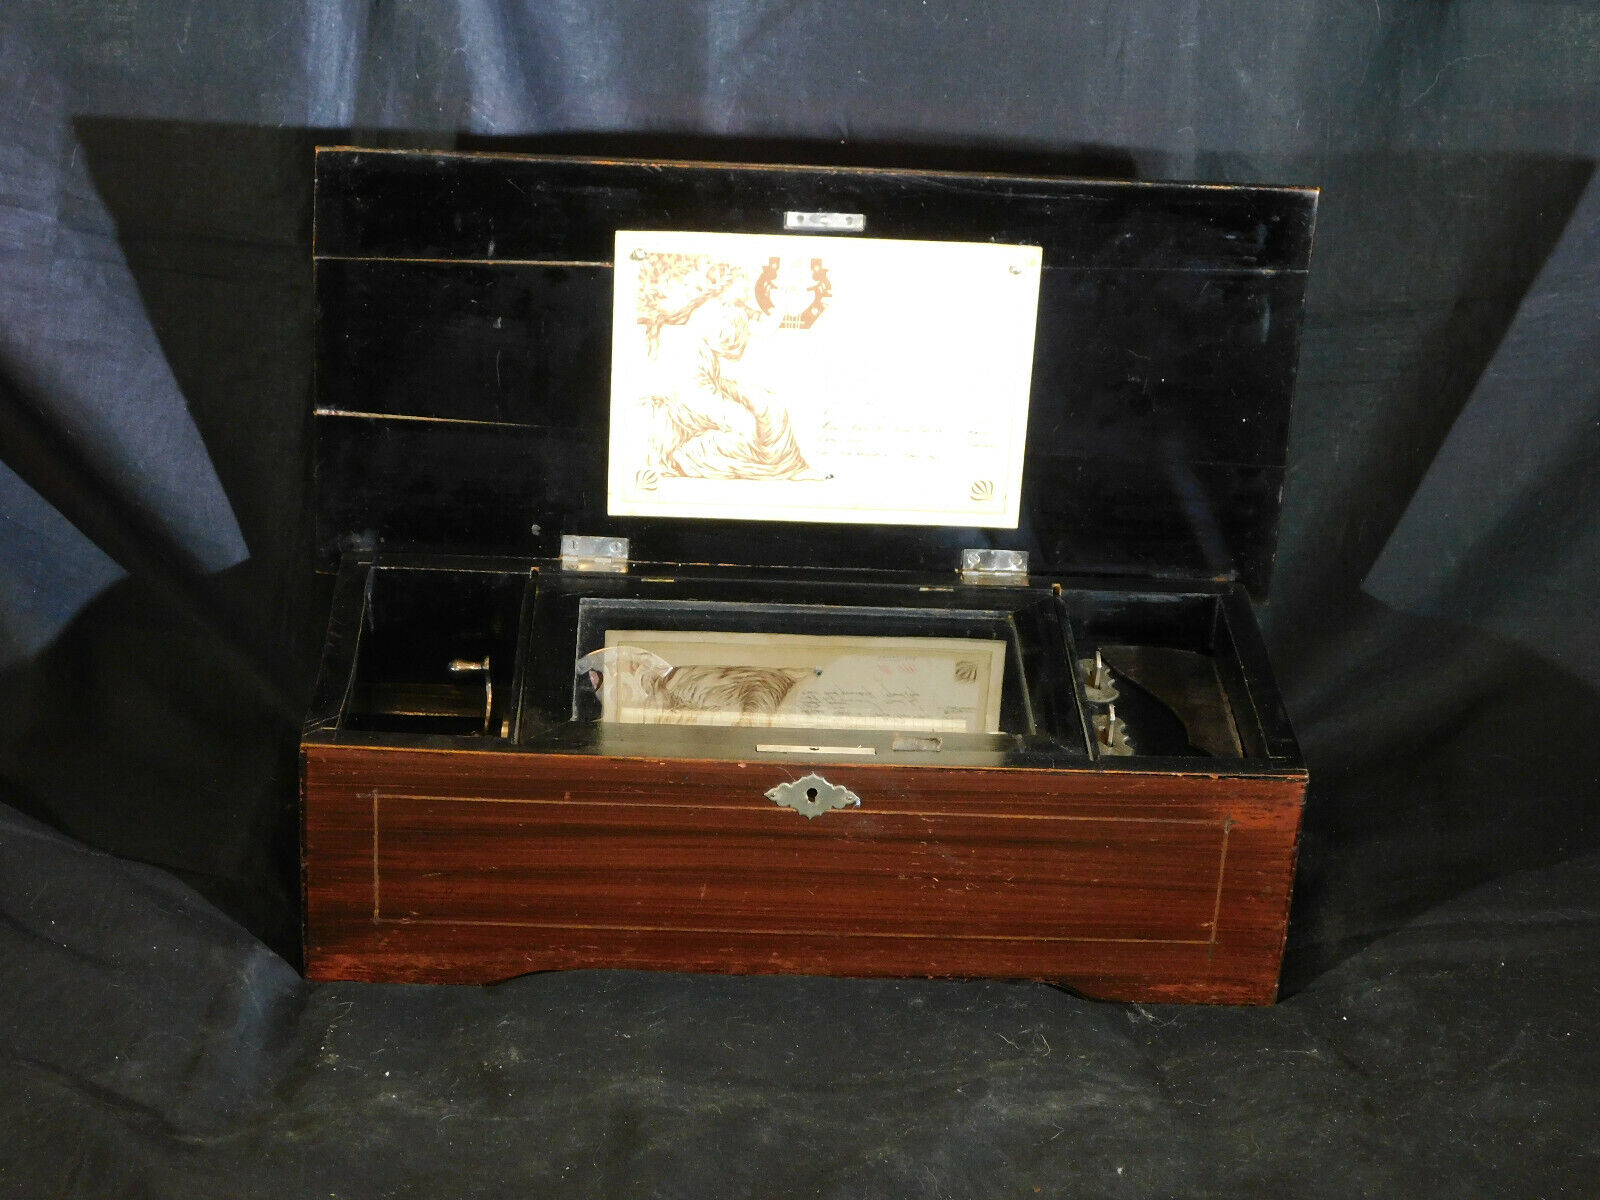 Antique c1800's Switzerland 10 Song Music Box-Works Great